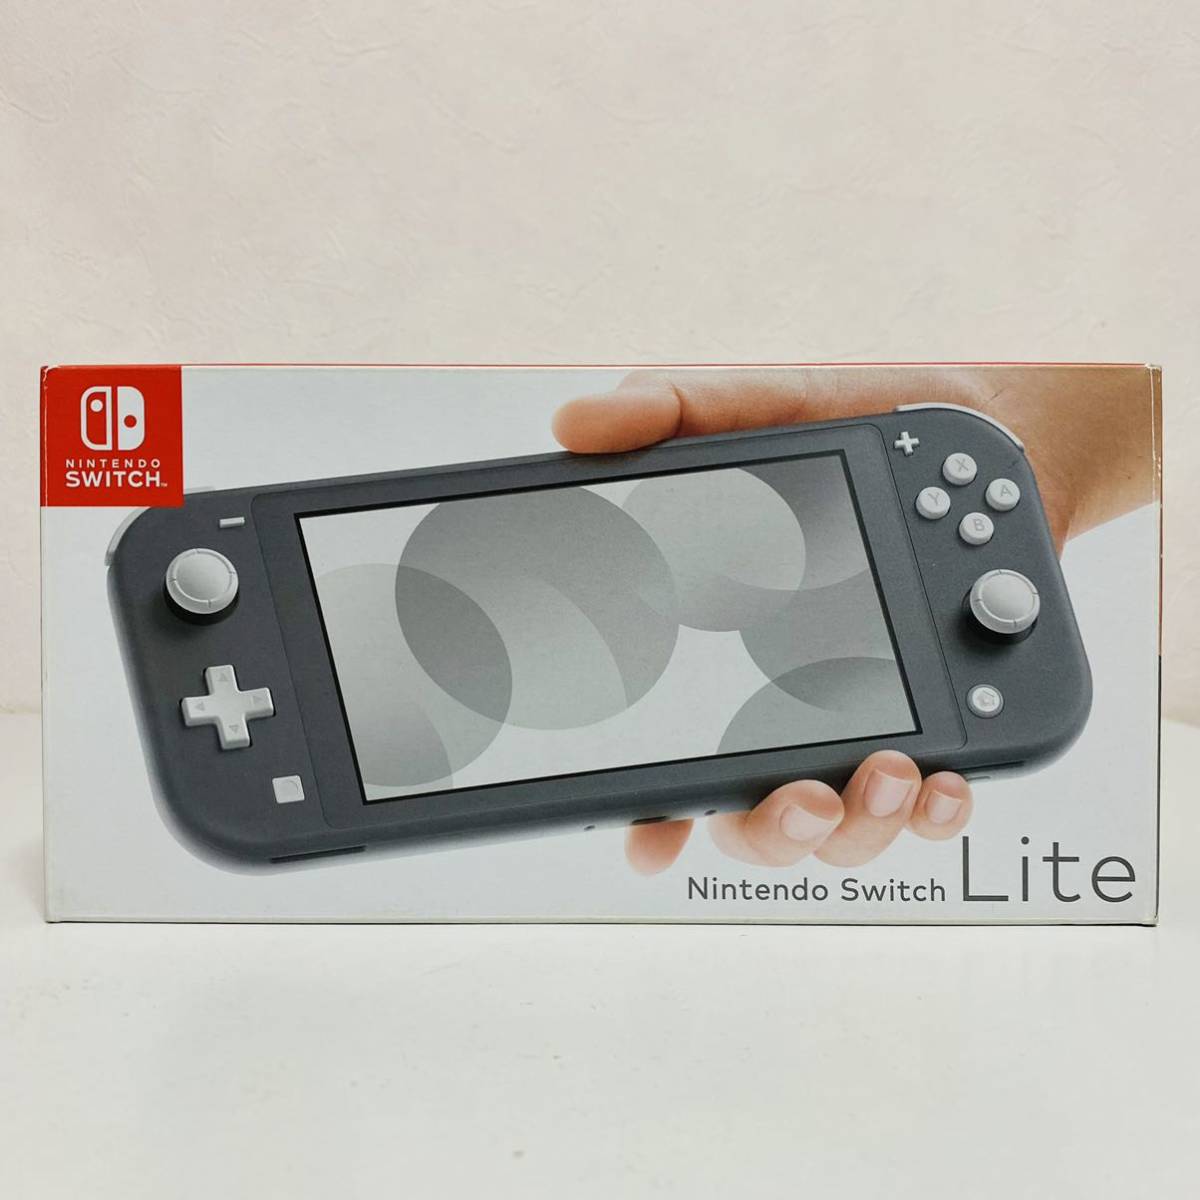 Nintendo Switch Lite スイッチライト グレー - inisnu.ac.id